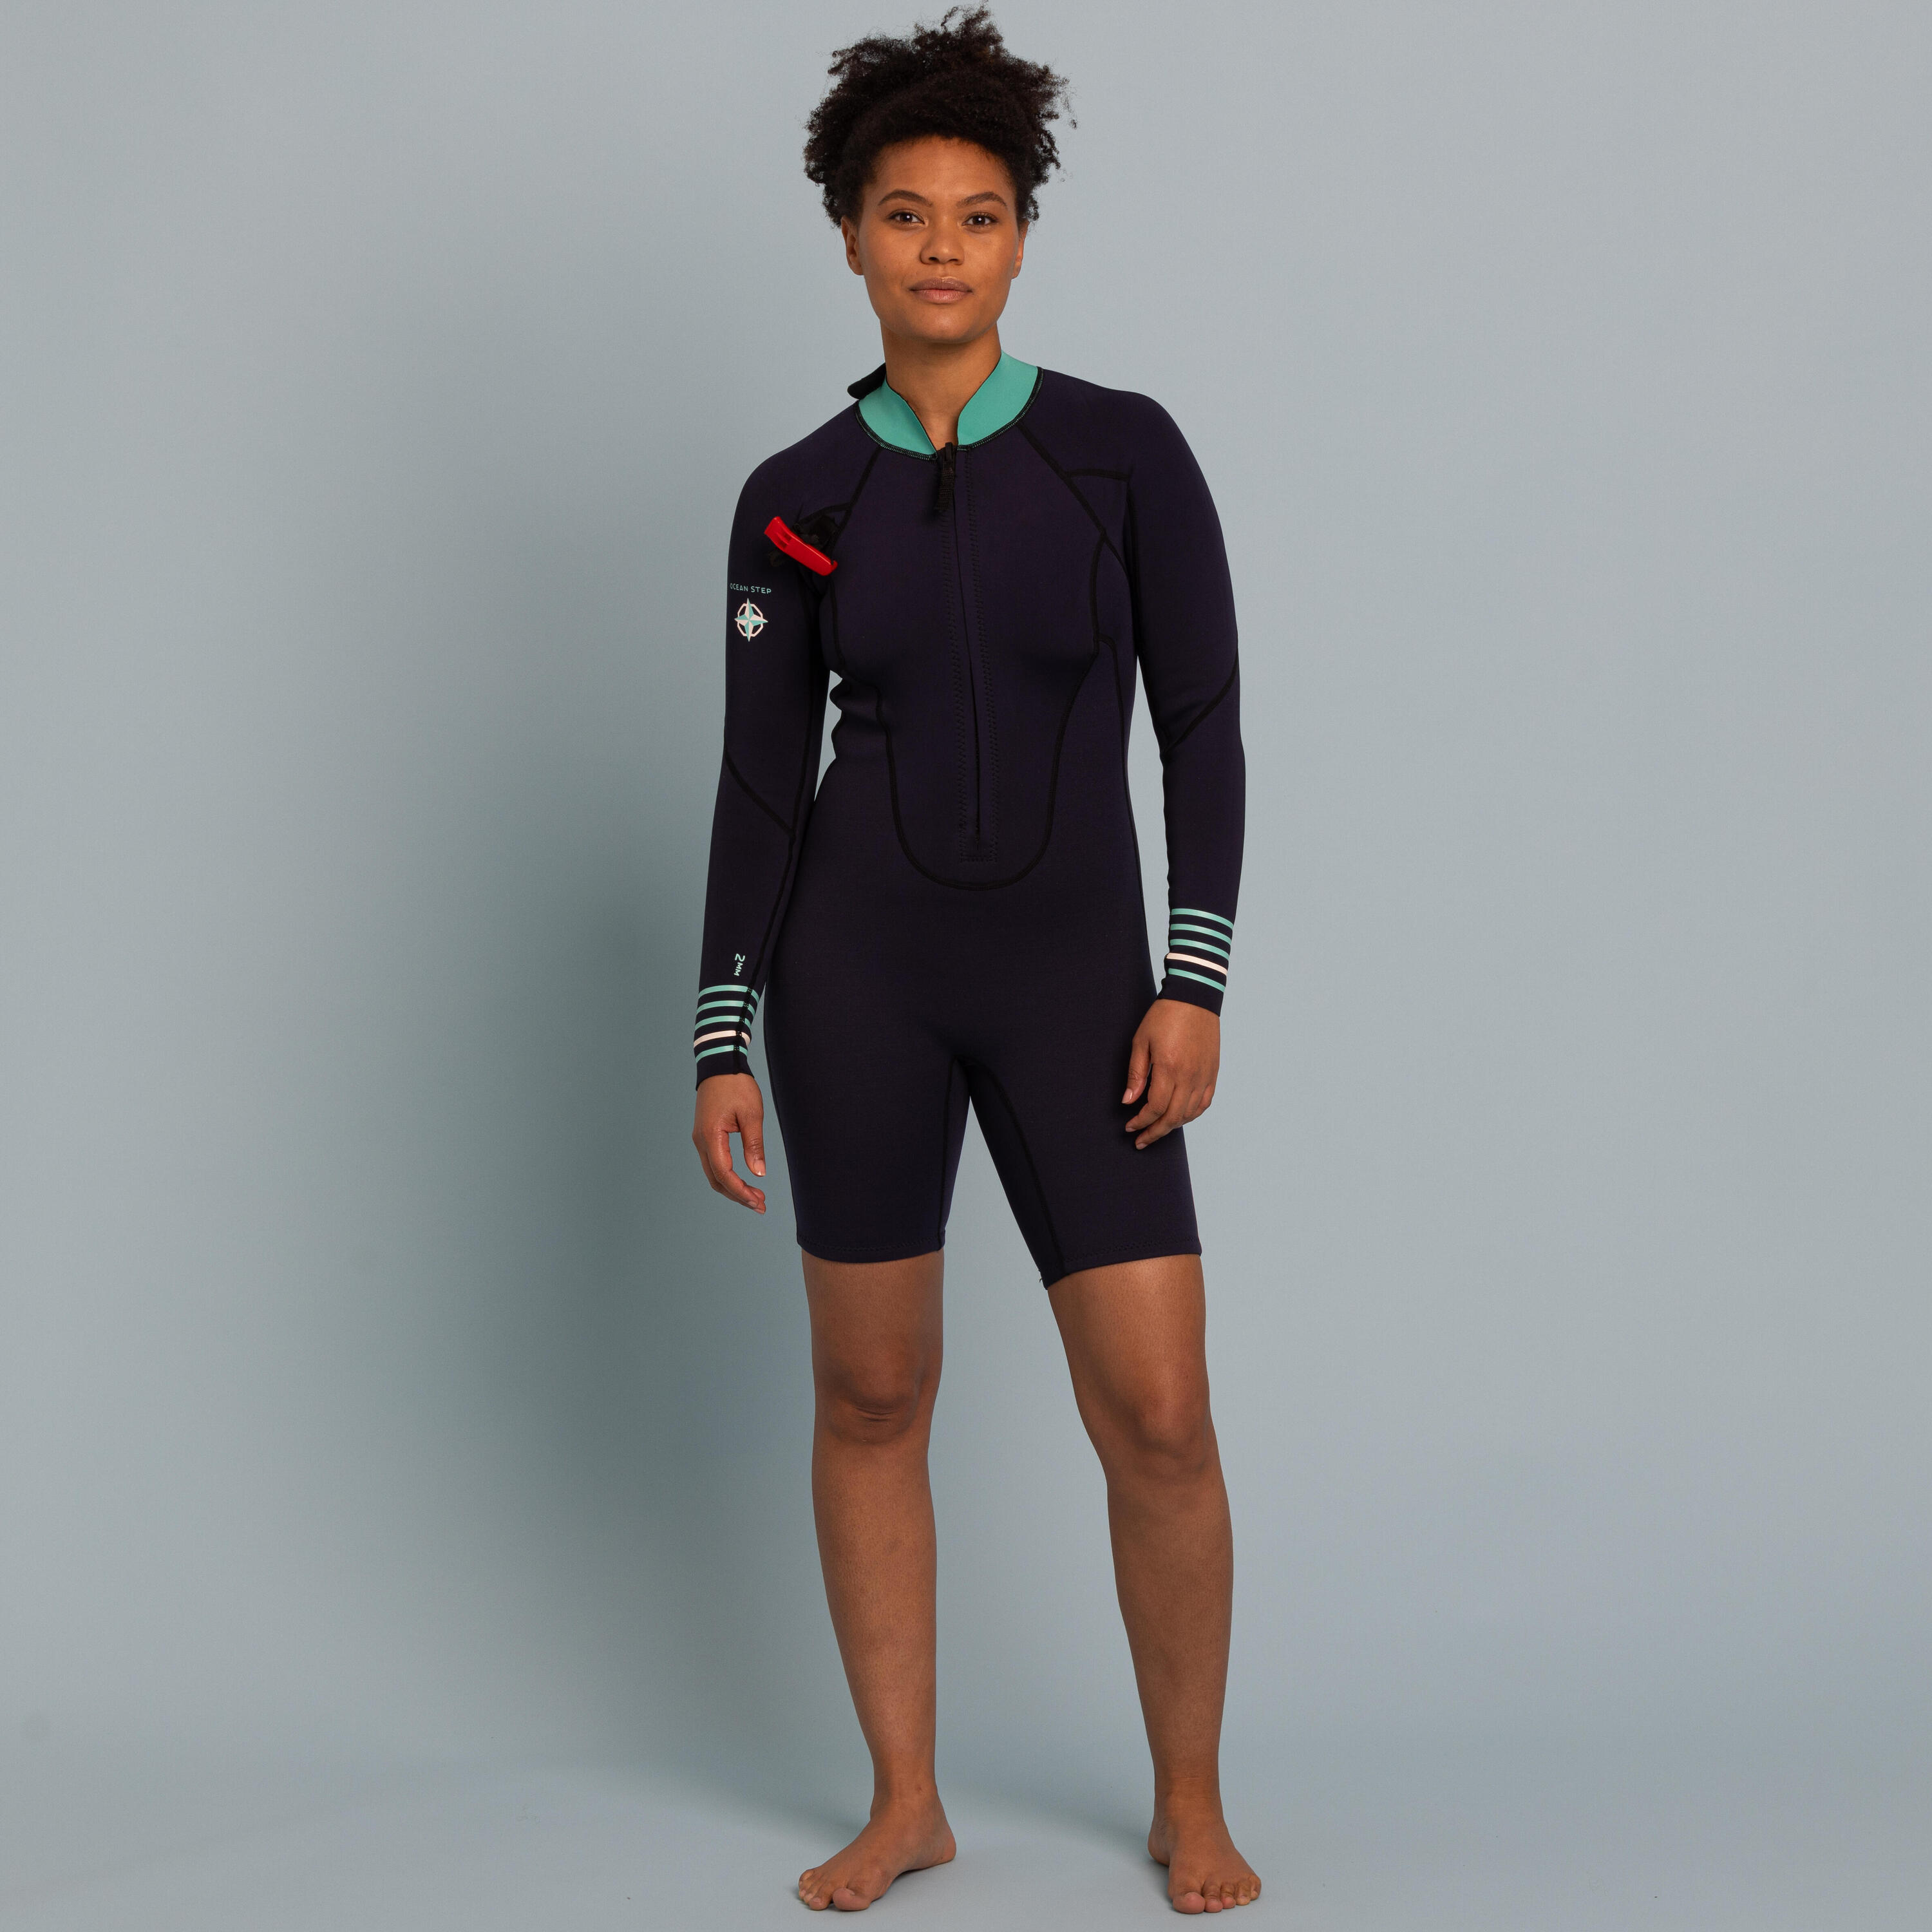 OCEAN STEP Women's Sea Walking Long-sleeved Neoprene Short Wetsuit 2/2 mm - Dark Blue